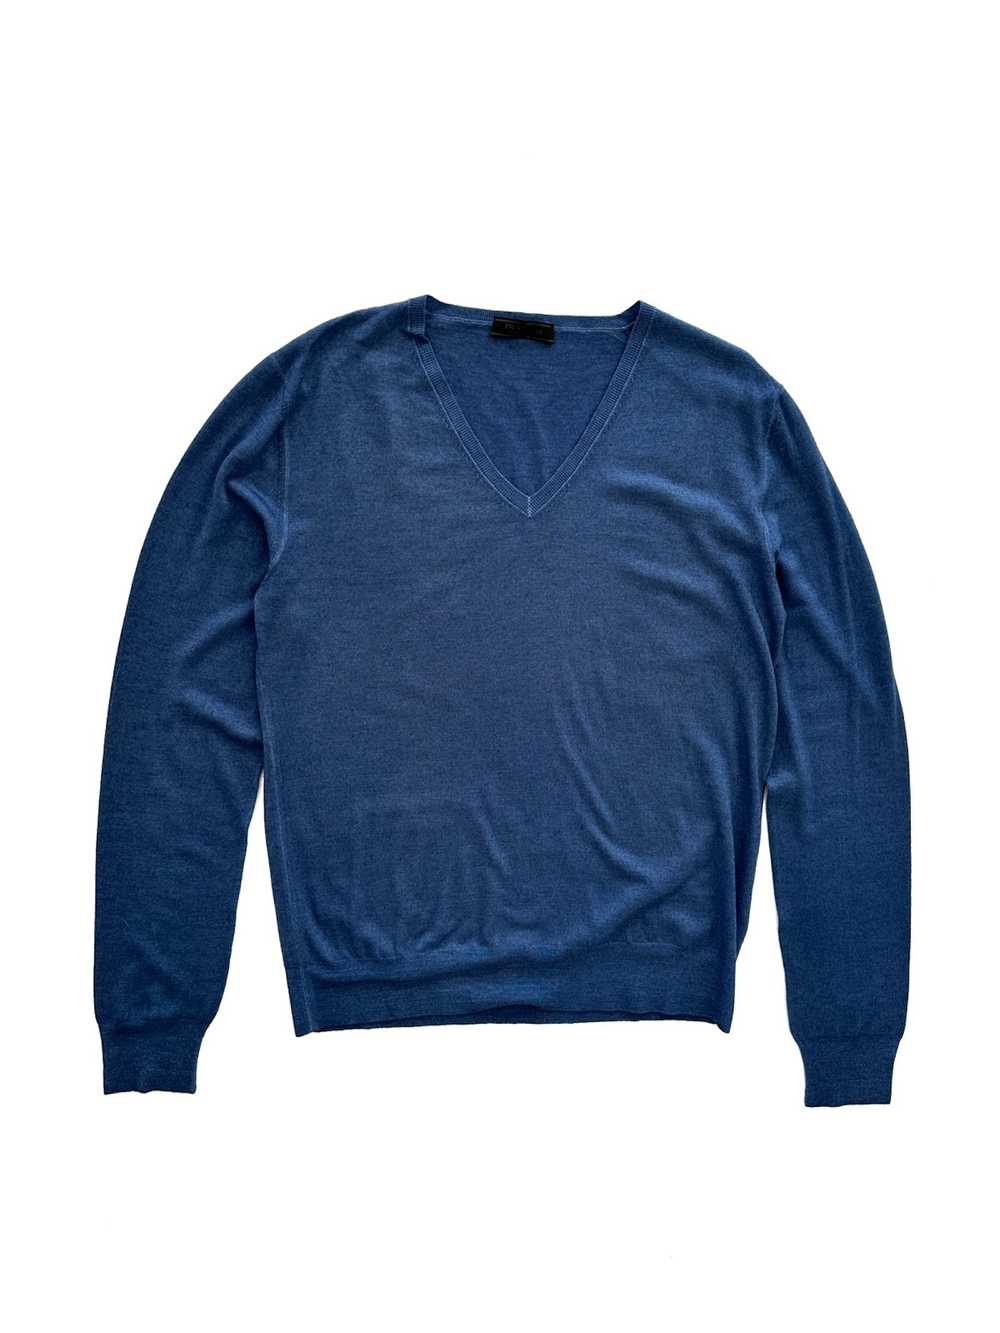 Prada Prada Wool Sweater Cardigan - image 2